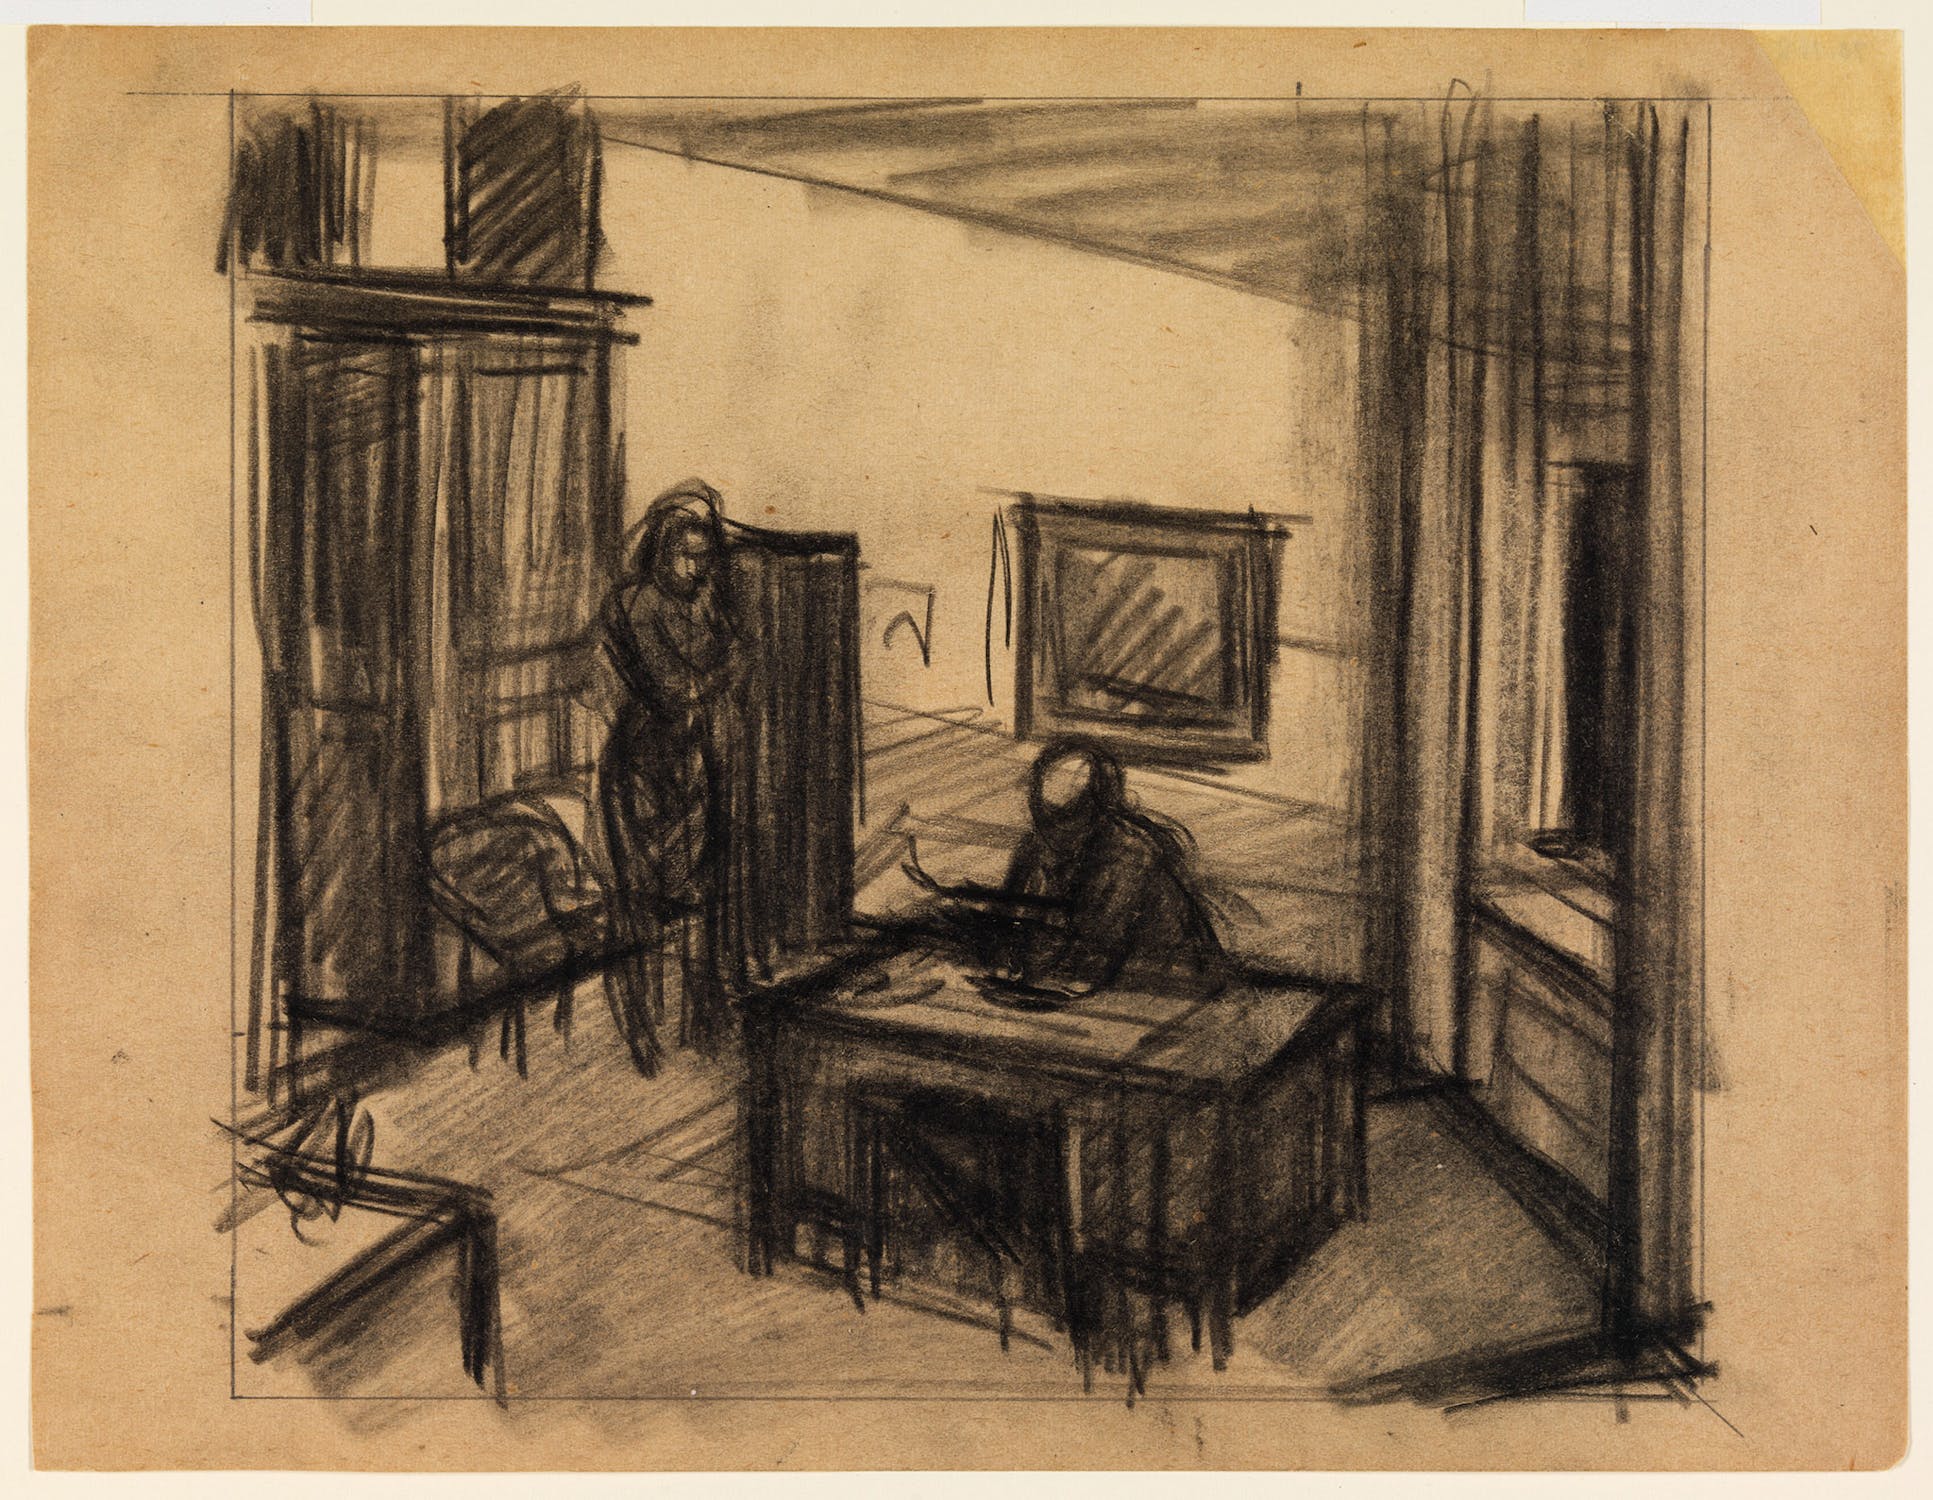 Hopper Drawing: A Painter's Process